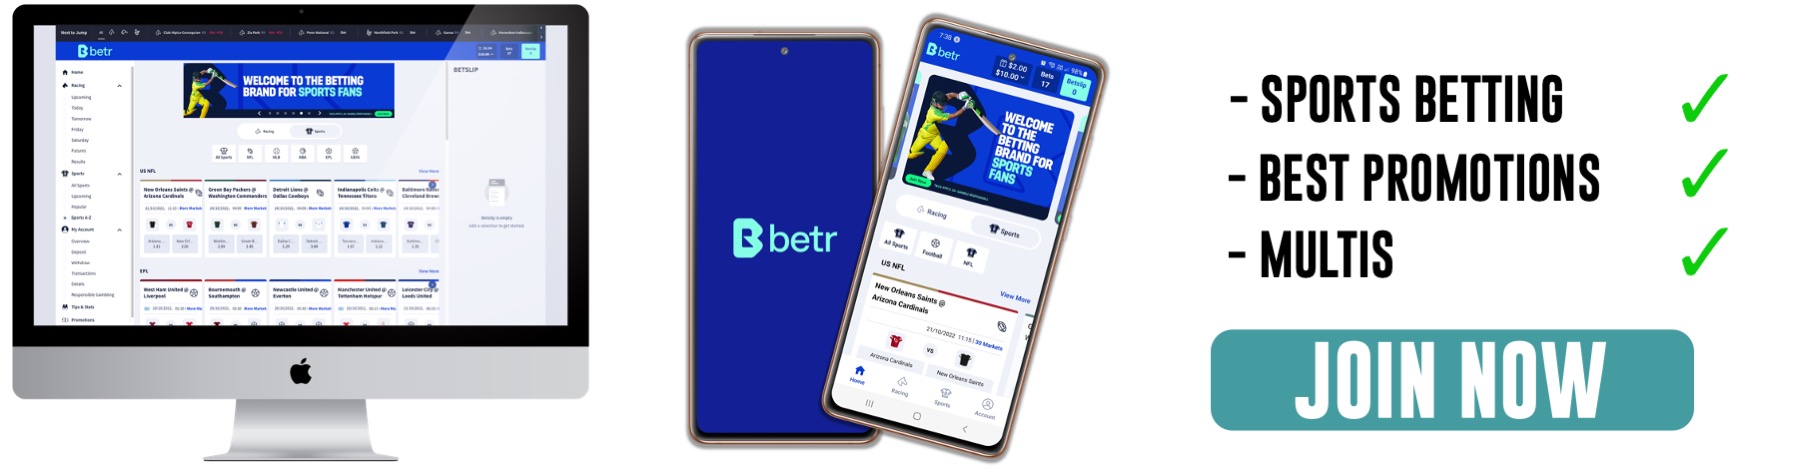 Betr eSports Betting Site